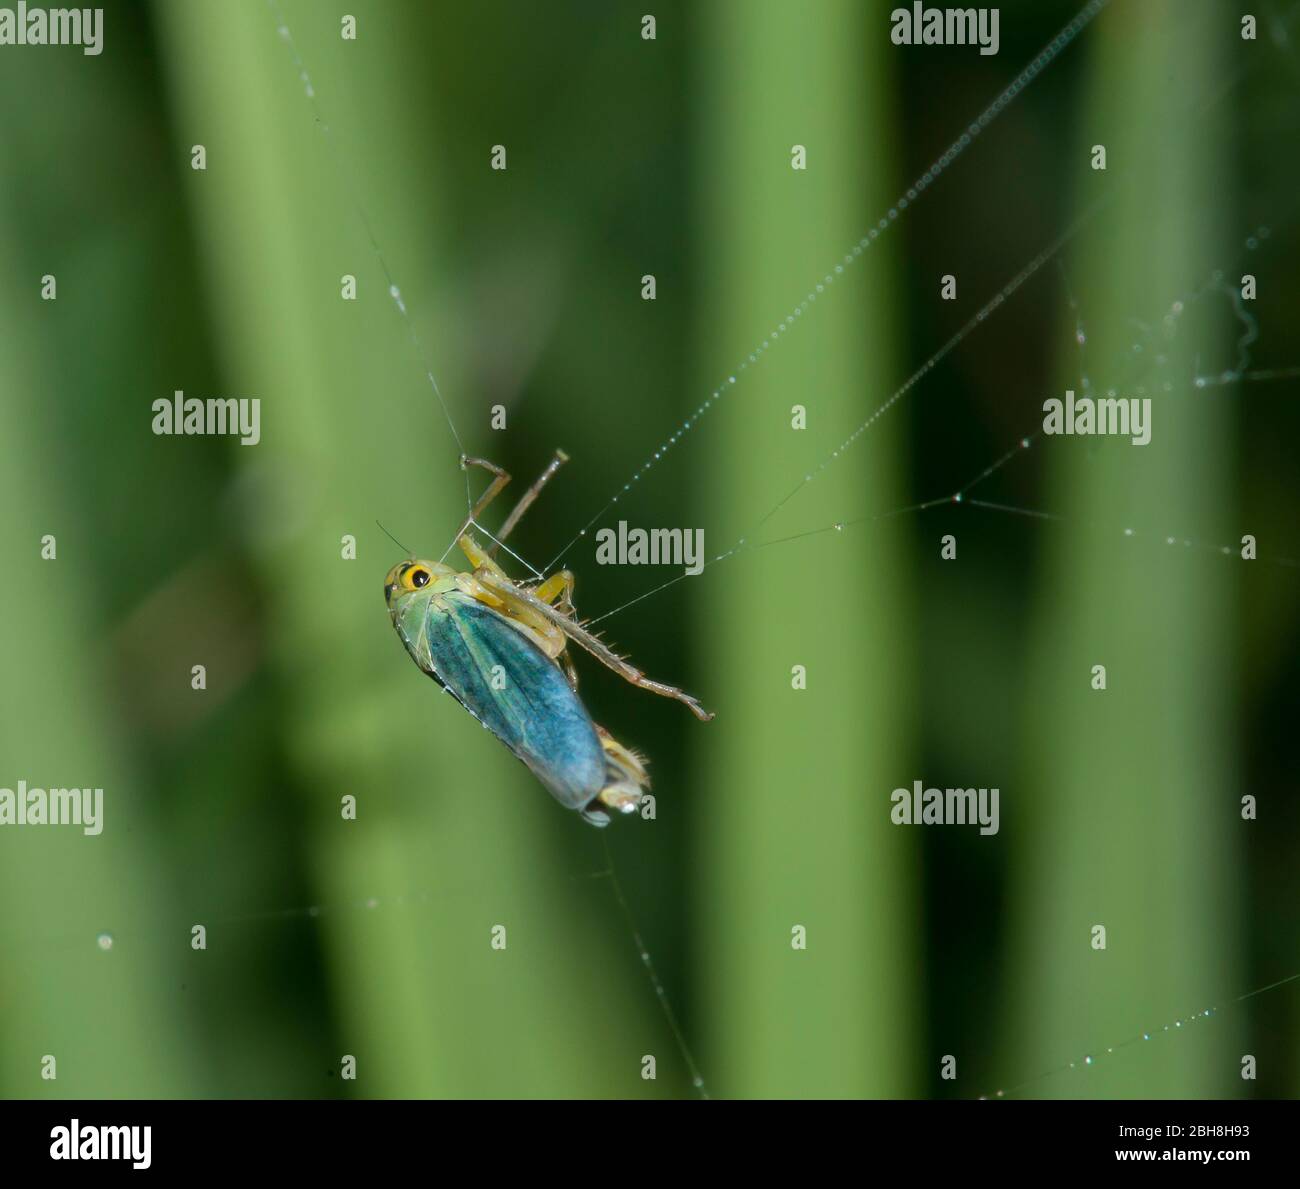 Green leafhoppers, Cicadella viridis, Tettigella viridis, caught in spider web, Bavaria, Germany Stock Photo